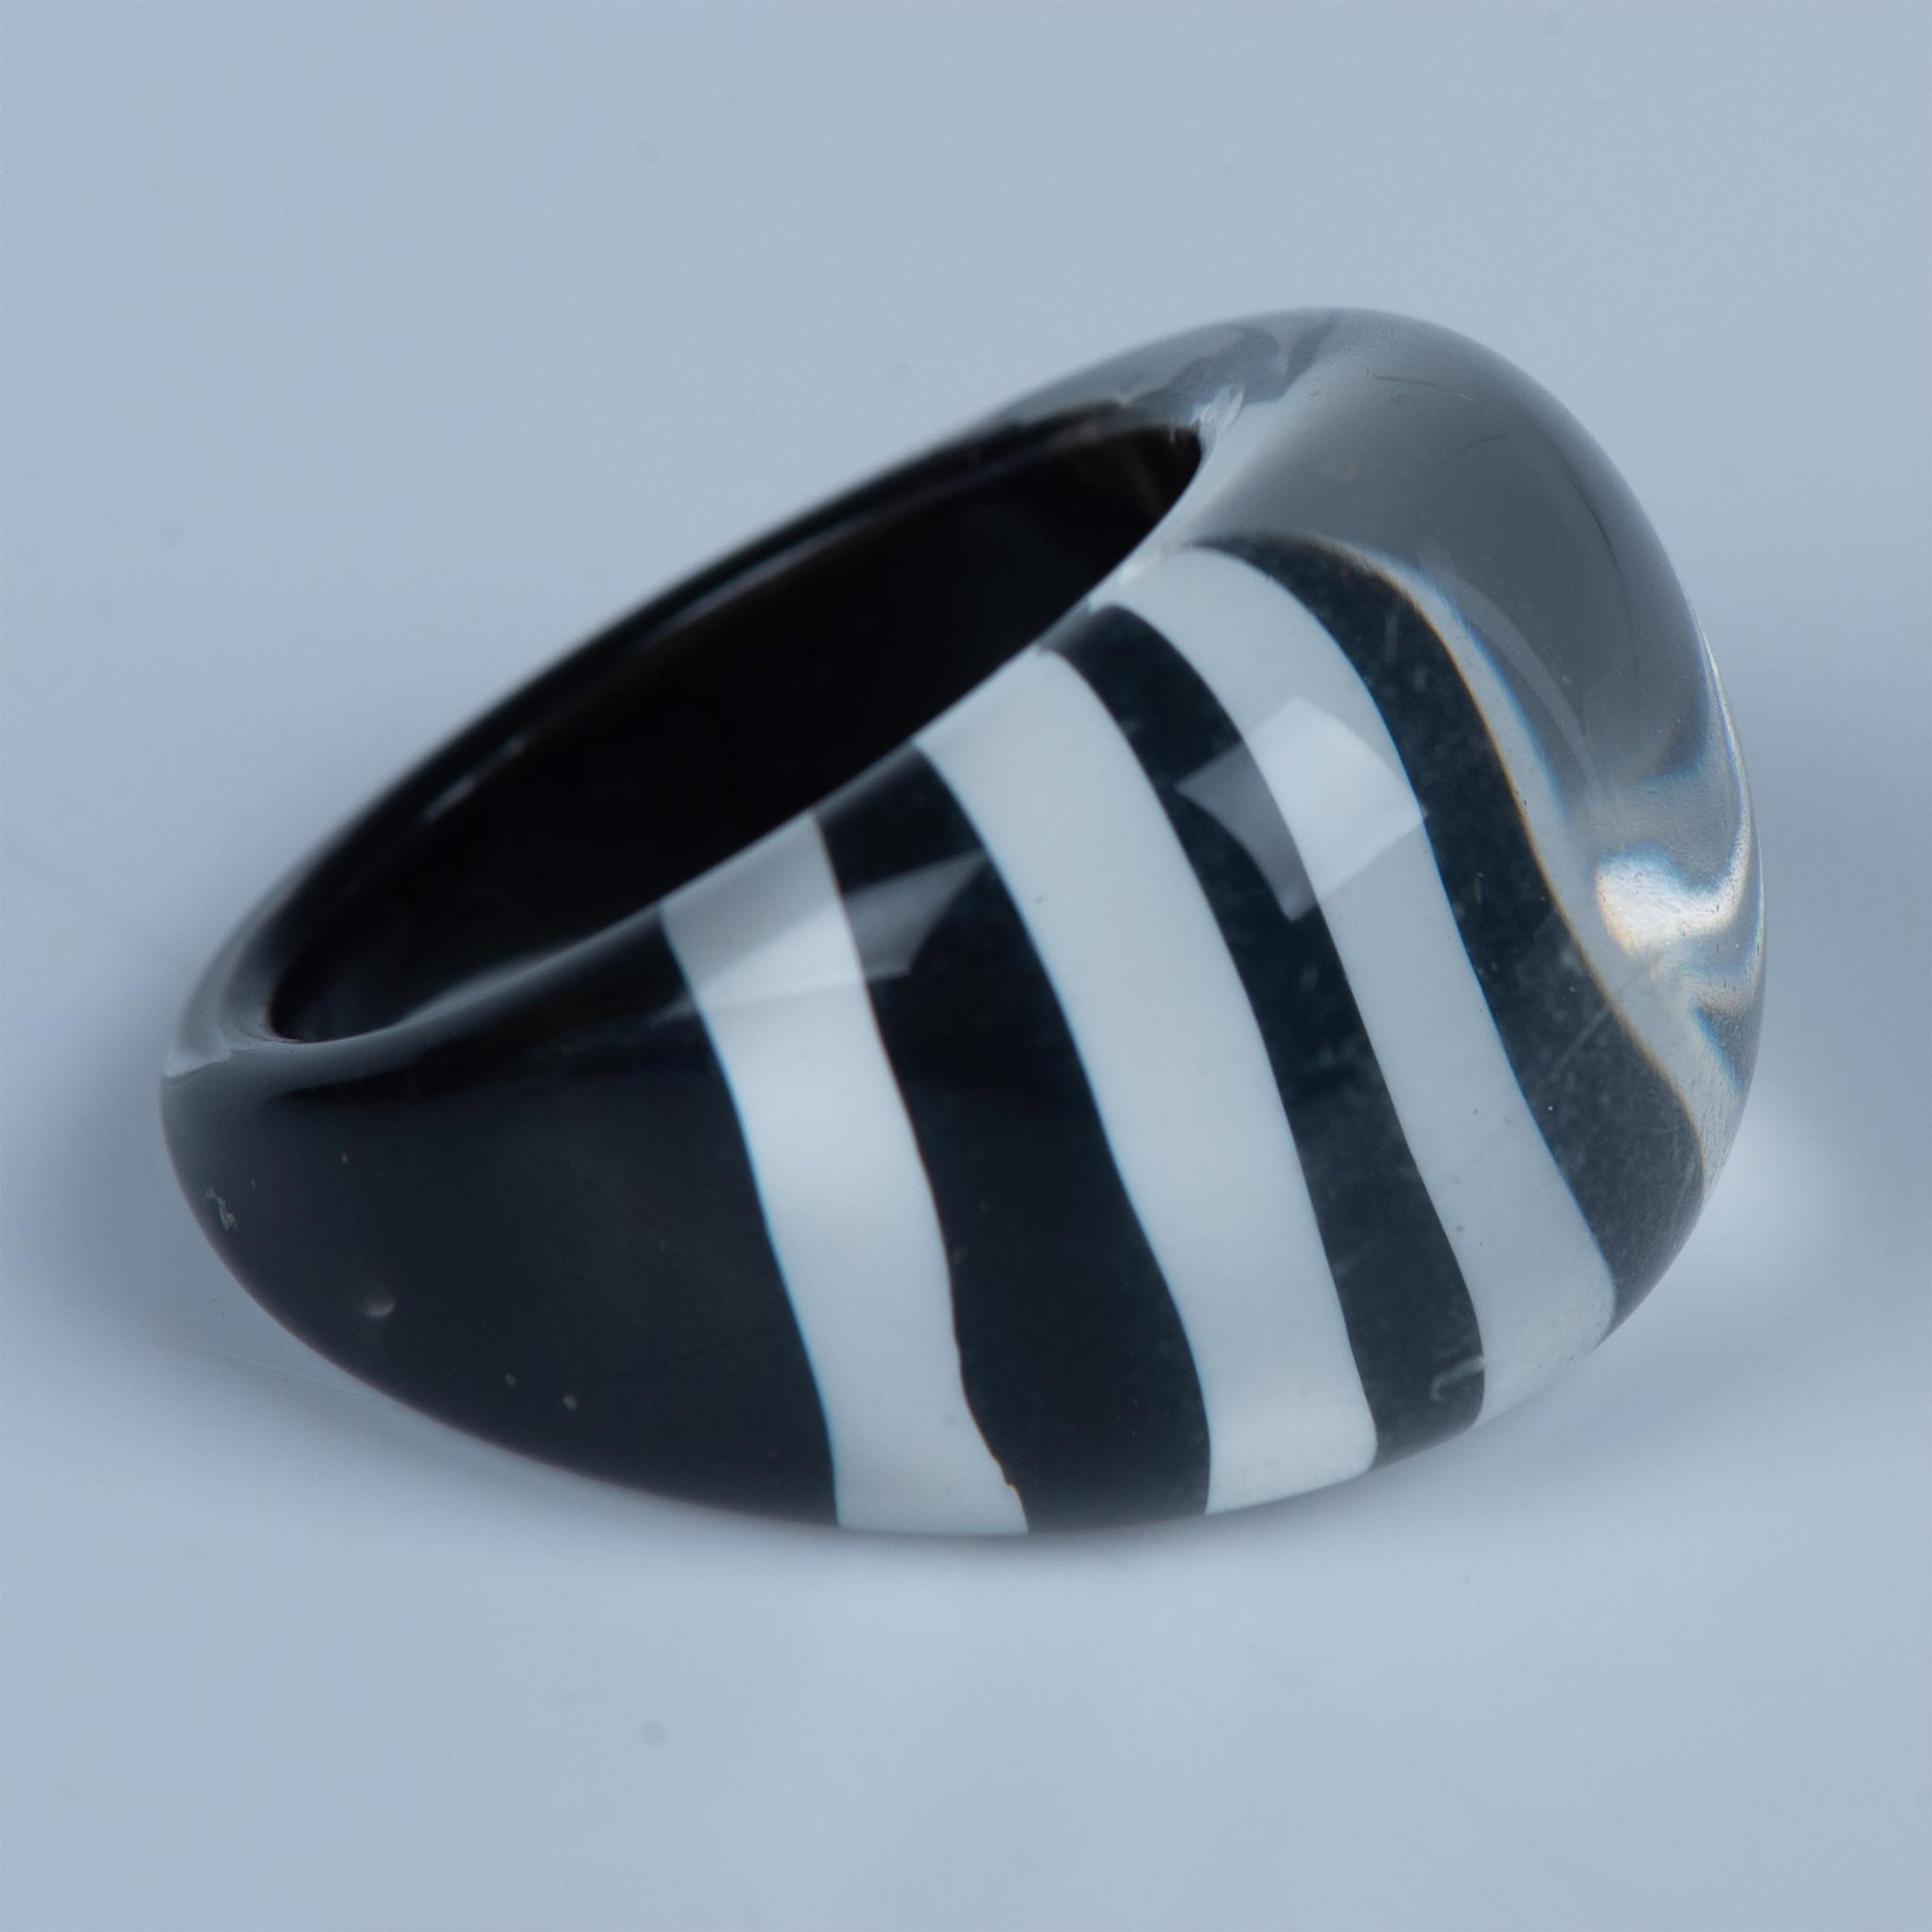 Retro Black & White Striped Lucite Ring - Image 2 of 5